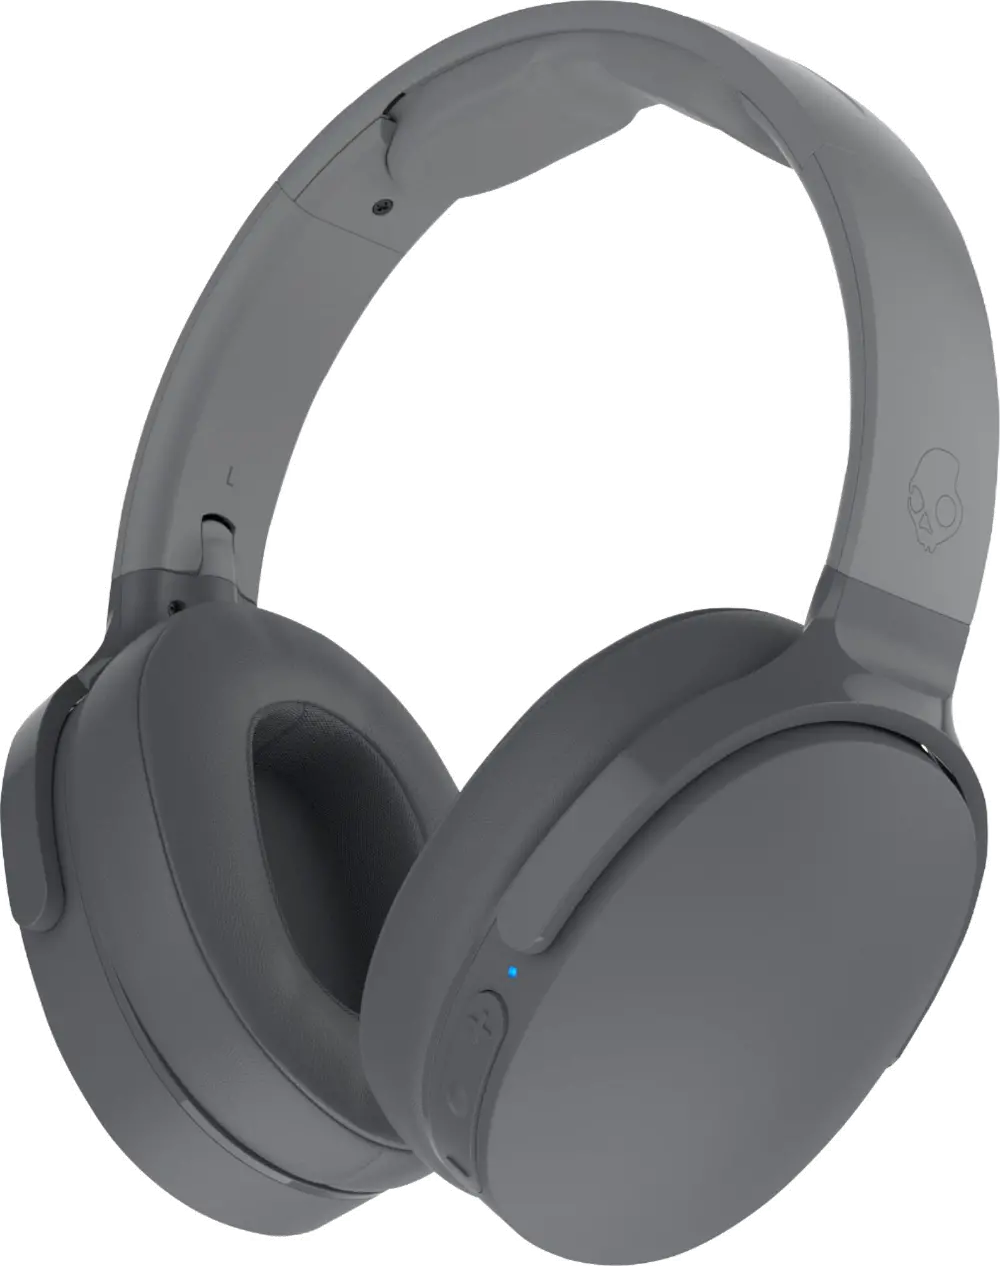 S6HTW-L374,HESH3,GRY Skullcandy HESH 3 Wireless Over-the-Ear Headphones - Gray-1